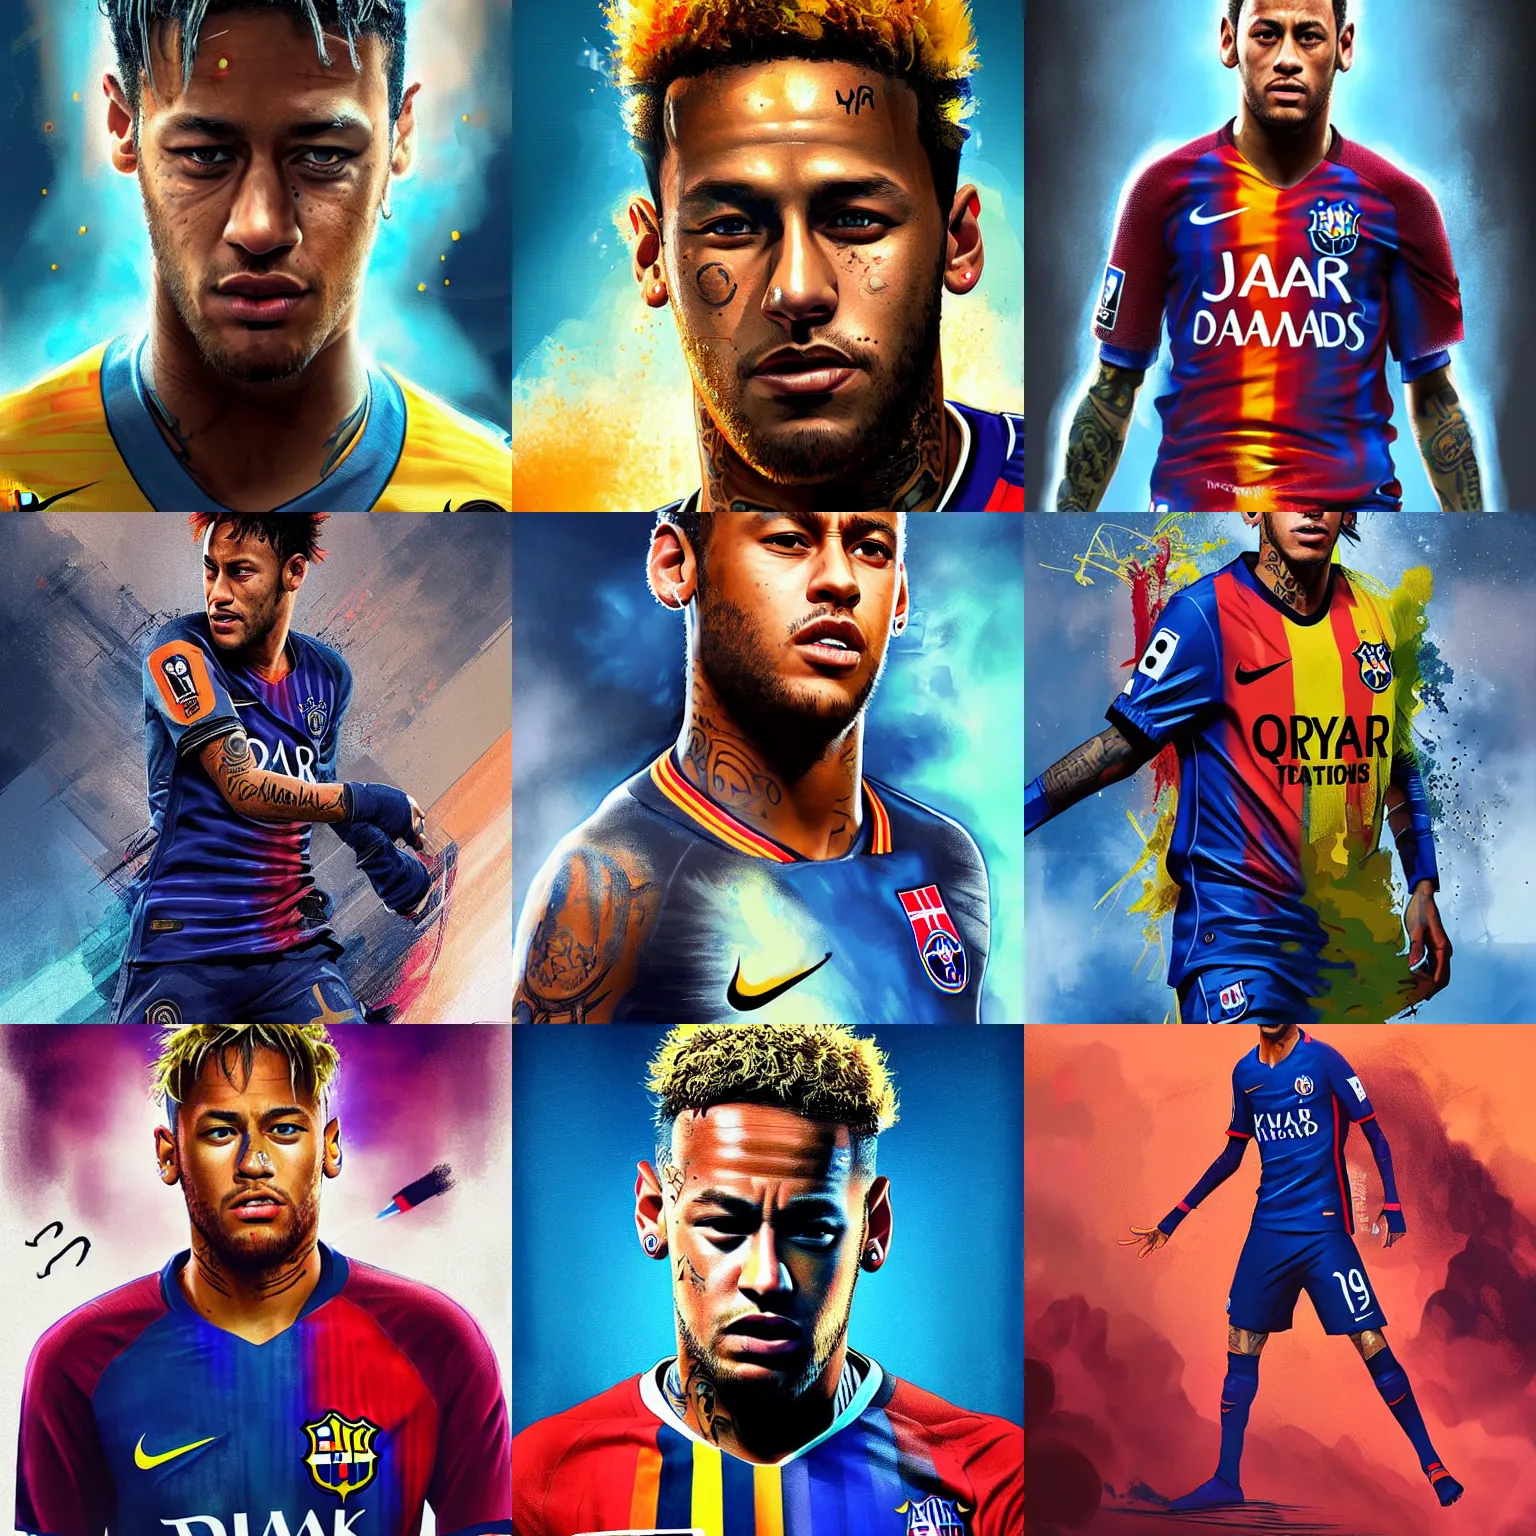 Prompt: Neymar jr as an Apex Legends character digital illustration portrait design by, Mark Brooks and Brad Kunkle detailed, gorgeous lighting, wide angle action dynamic portrait